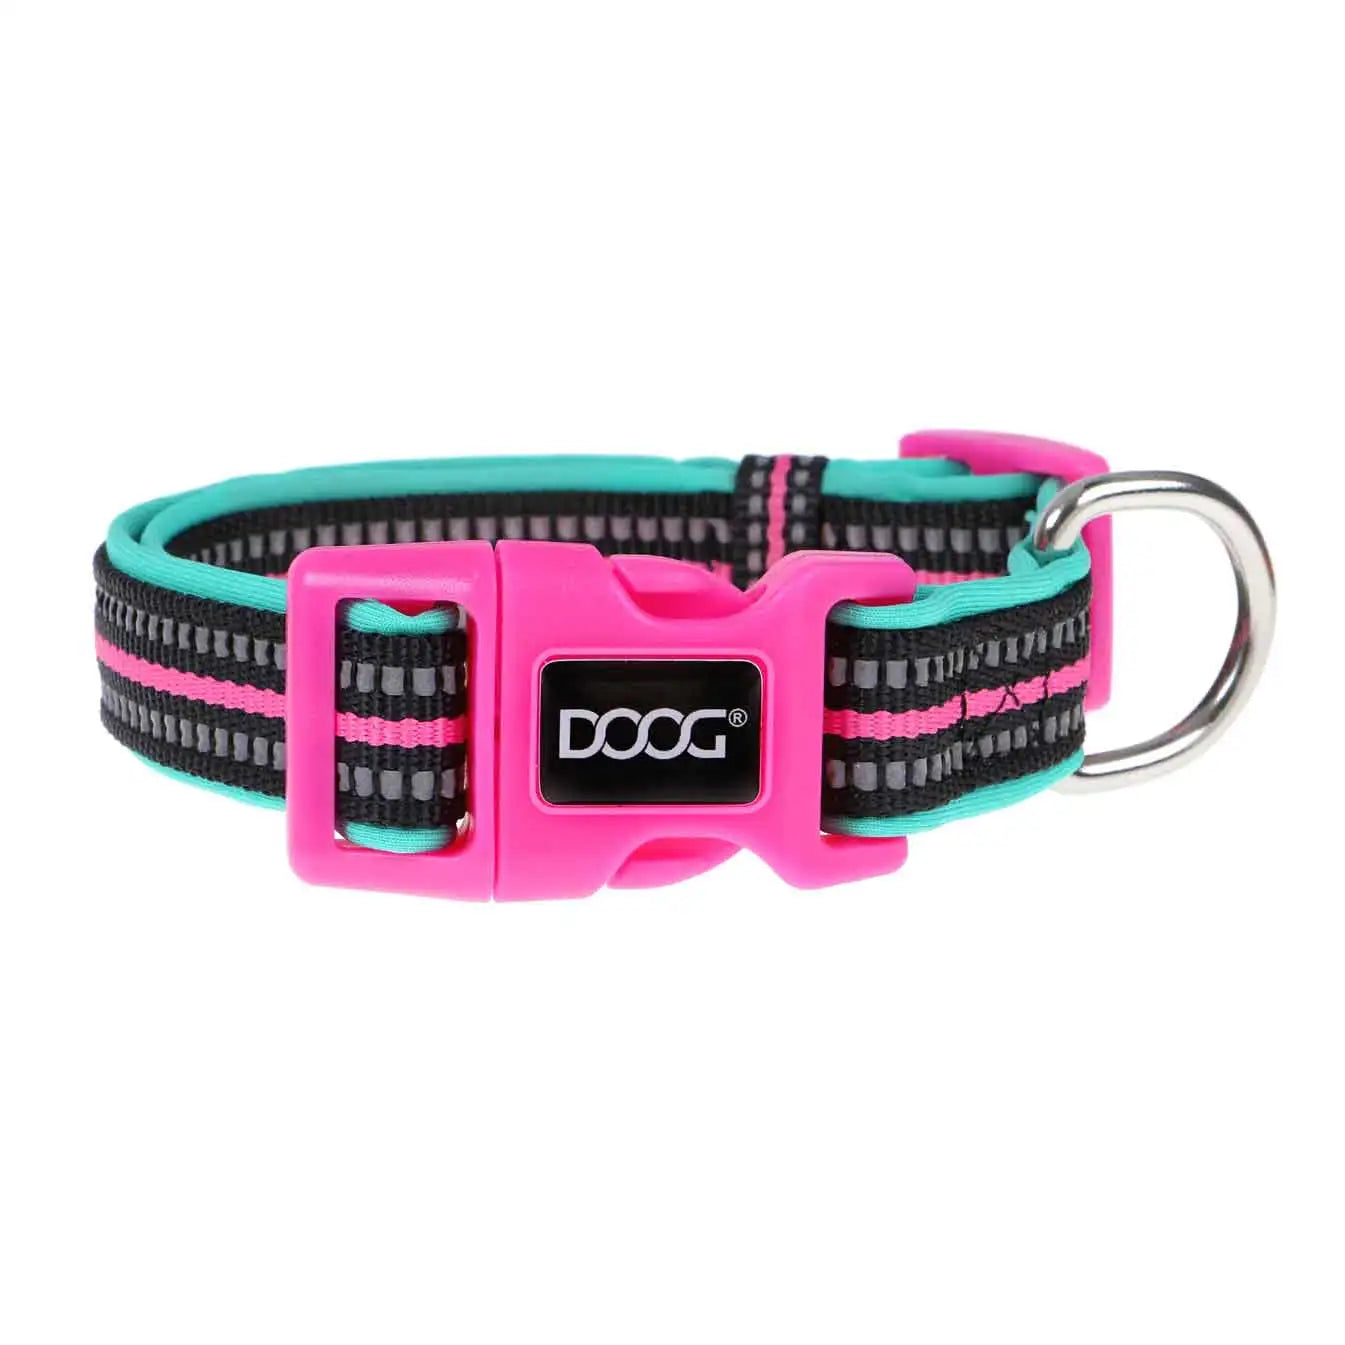 DOOG Neoprene Dog Collar Rin Tin Tin Neon Large Pink/Black/Teal